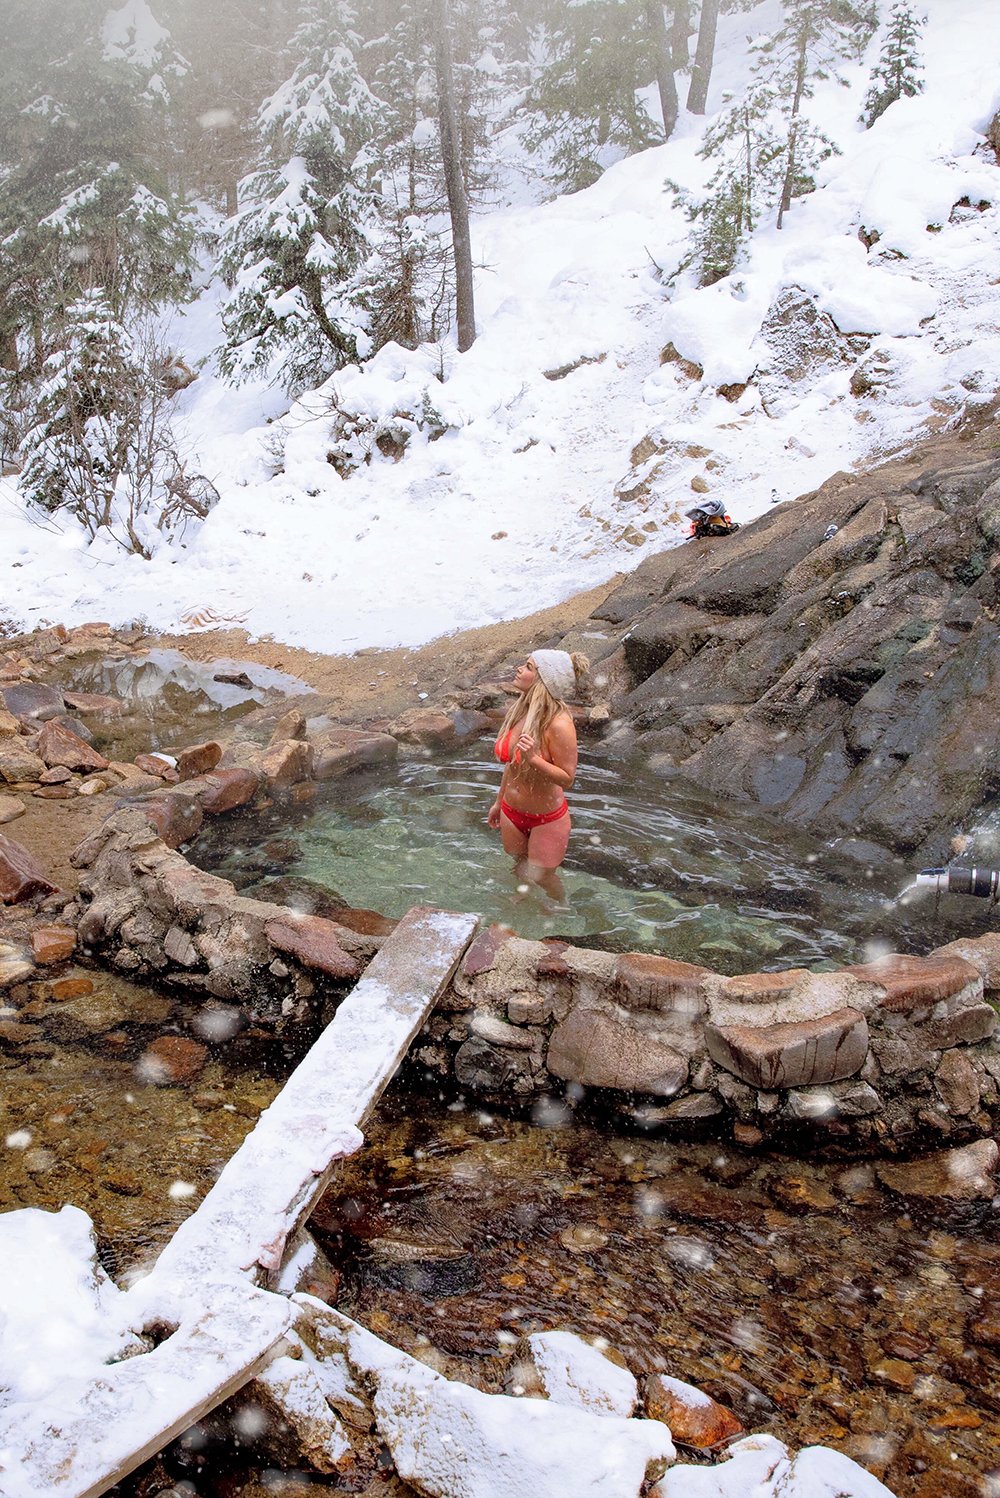 Samuels / Trail Creek Hot Springs in Idaho, USA